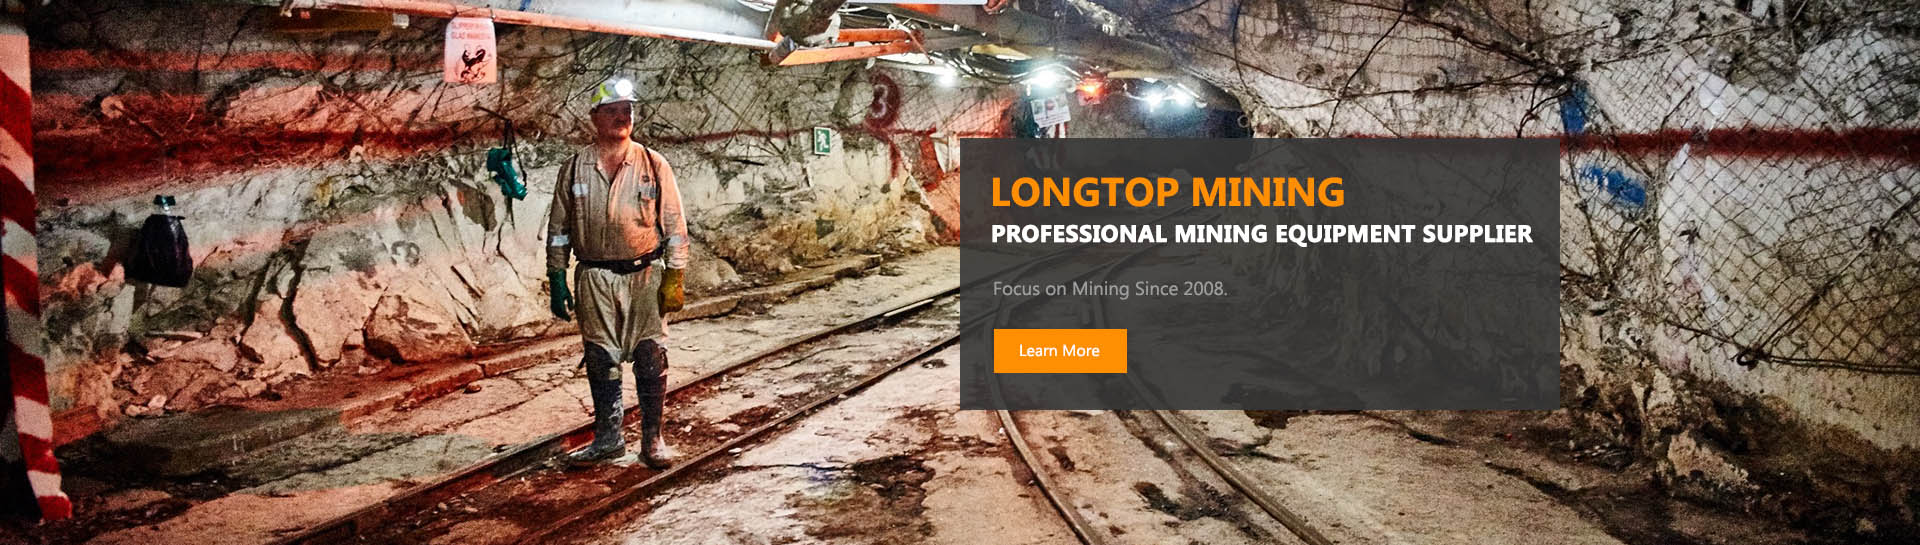 Longtop Mining, Professional Mining Equipment Supplier 